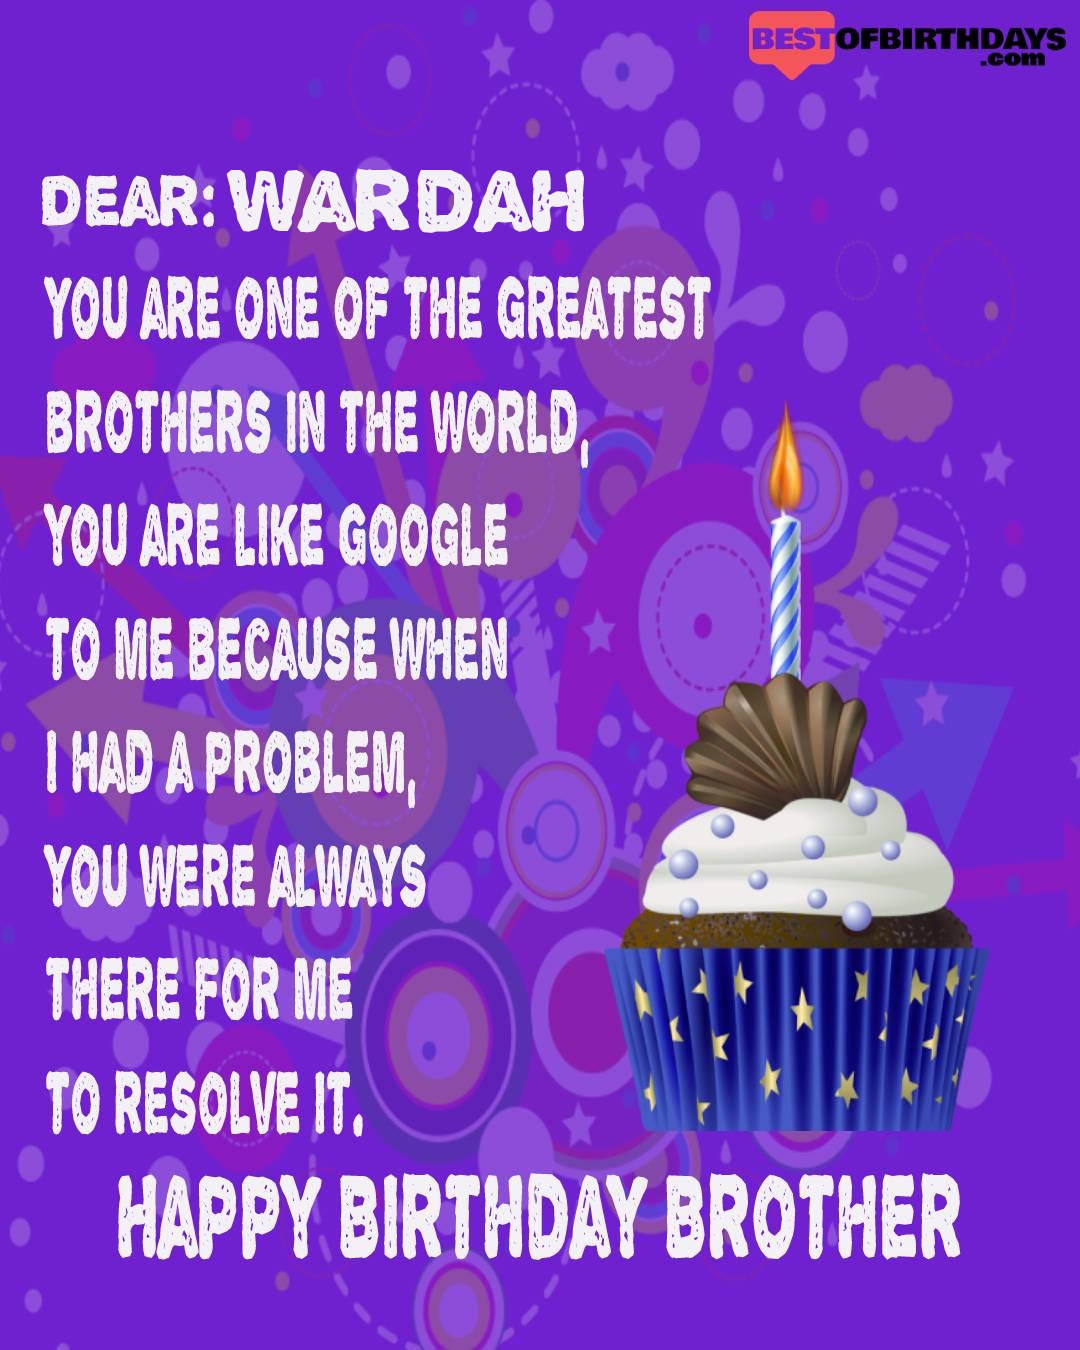 Happy birthday wardah bhai brother bro